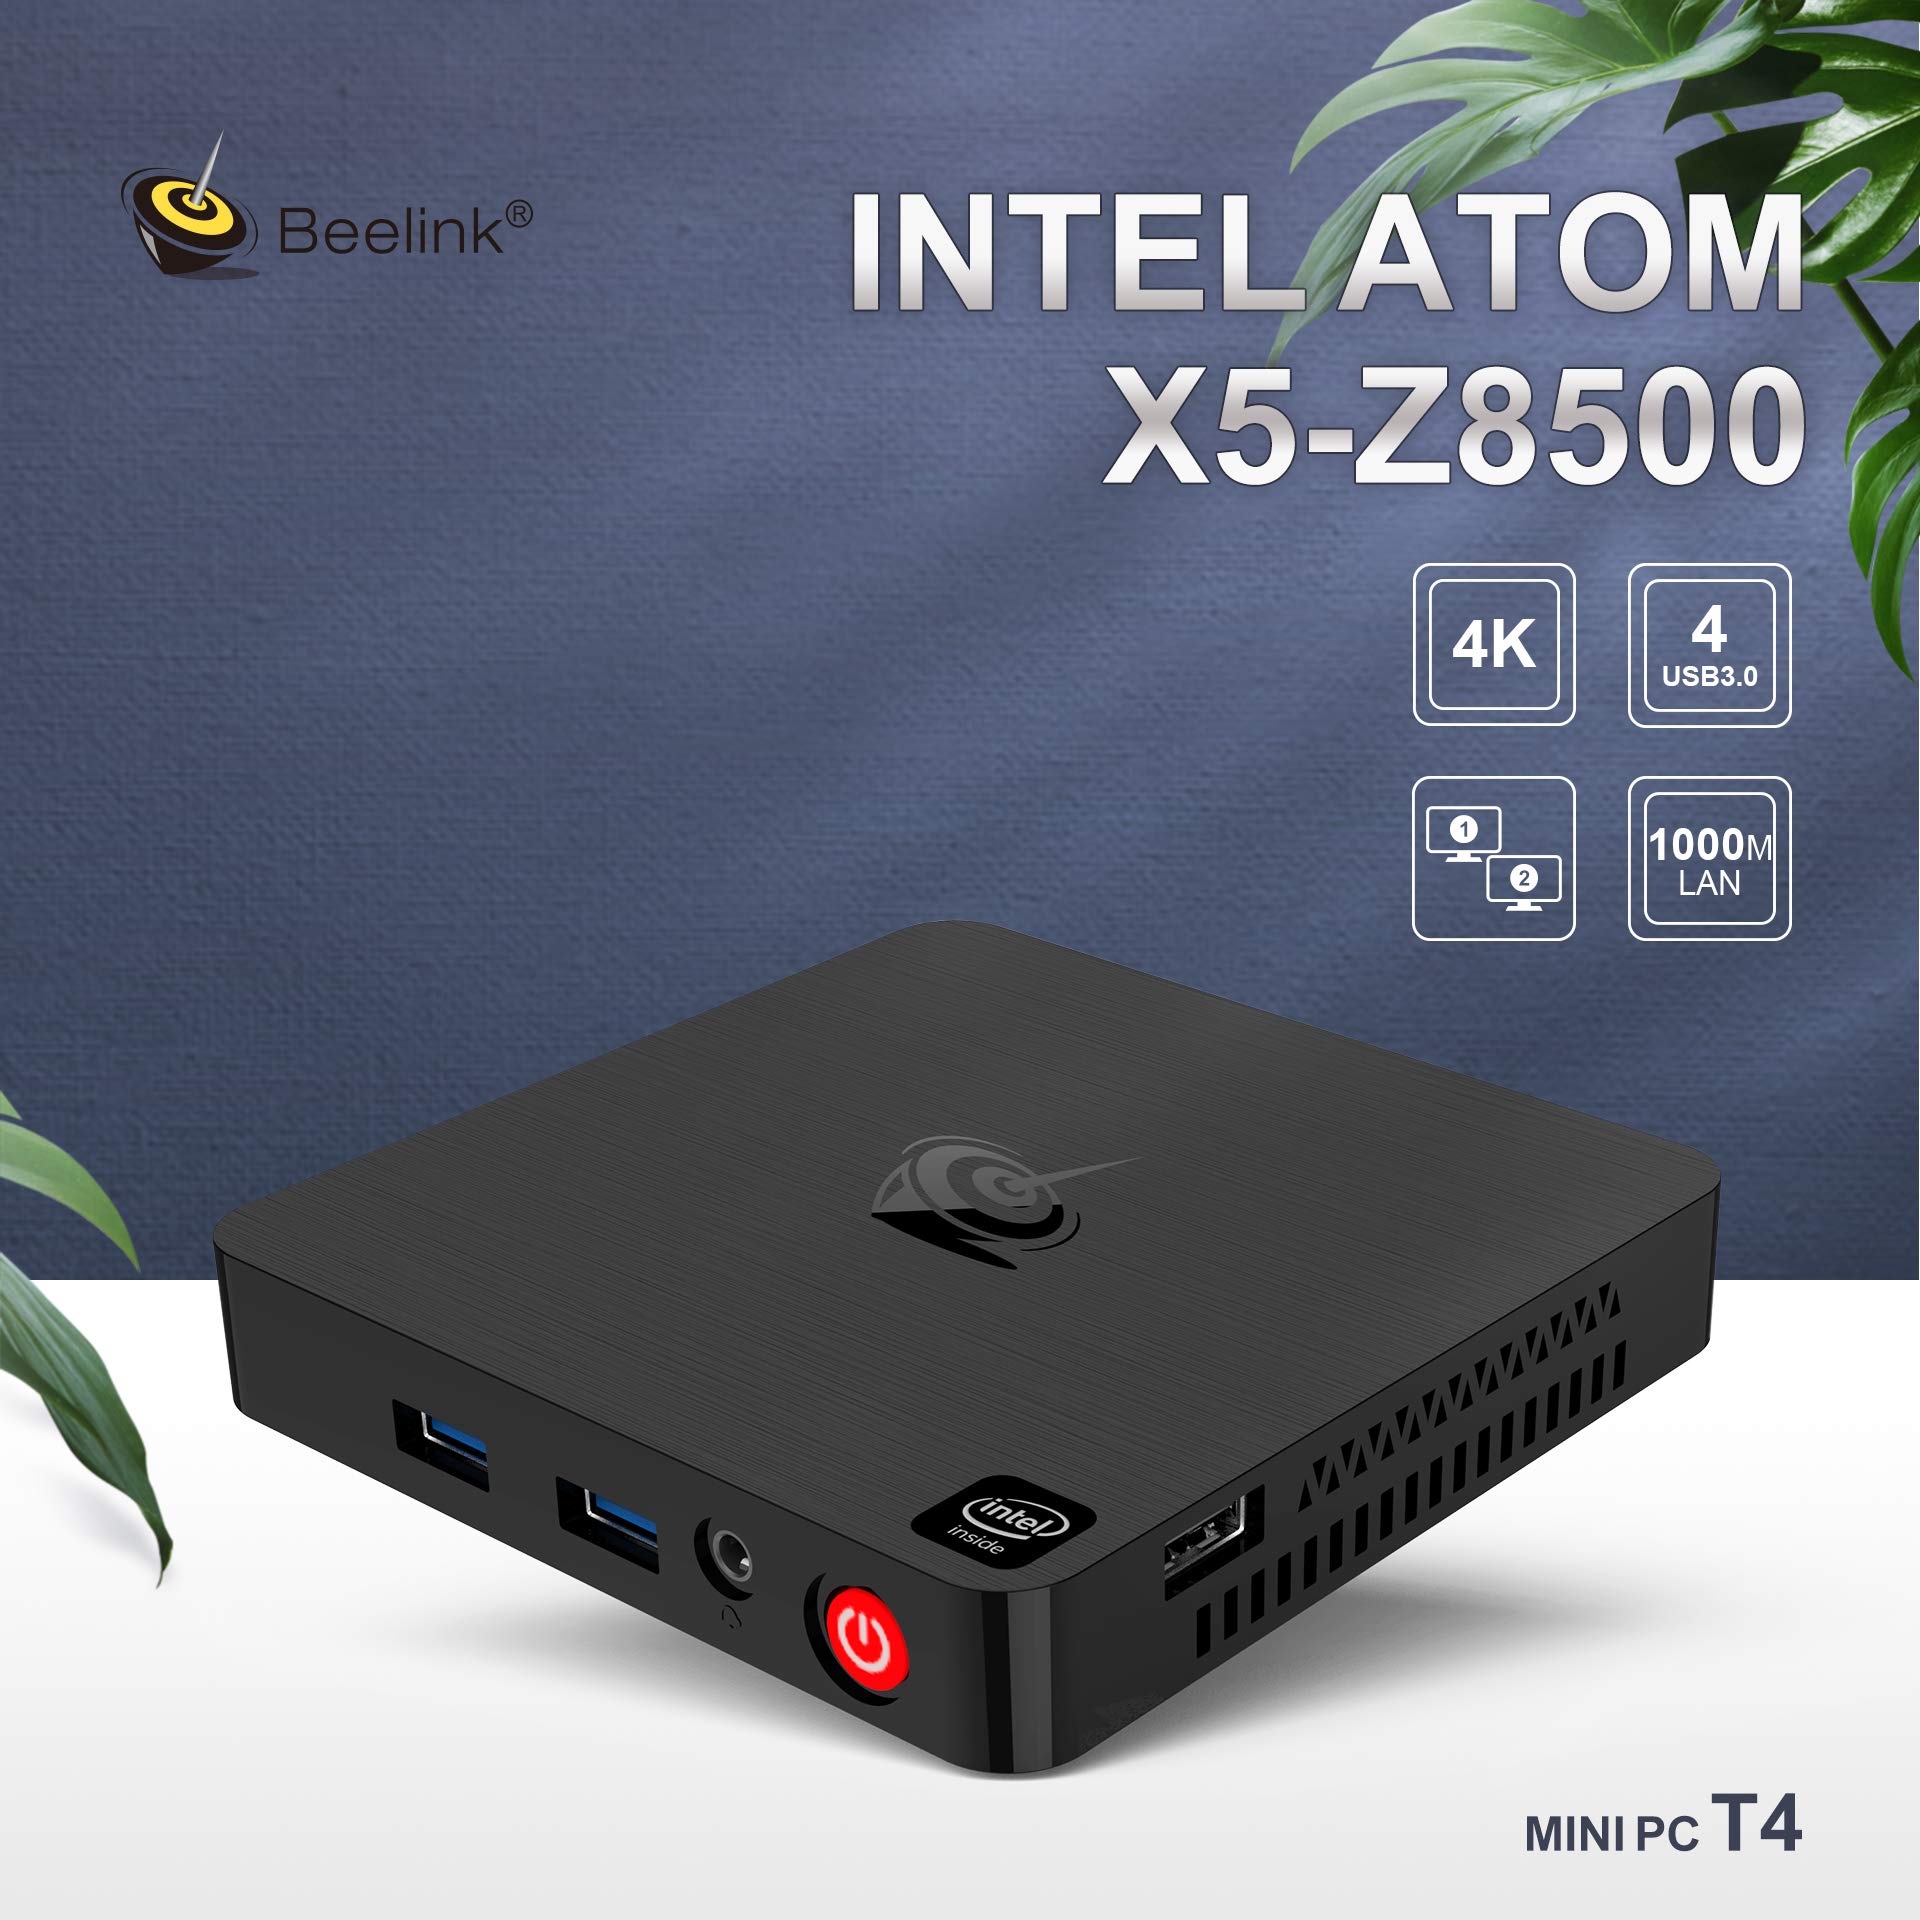 Mini Pc, Intel Atom x5-Z8500 Processor (2M Cache,1.44GHz-2.24GHz), 4GB+64GB eMMC, Mini Computers Support 2.4G+5.8G WiFi/Bluetooth4.0/USB3.0 * 4/HDMI+DP/Auto Power On